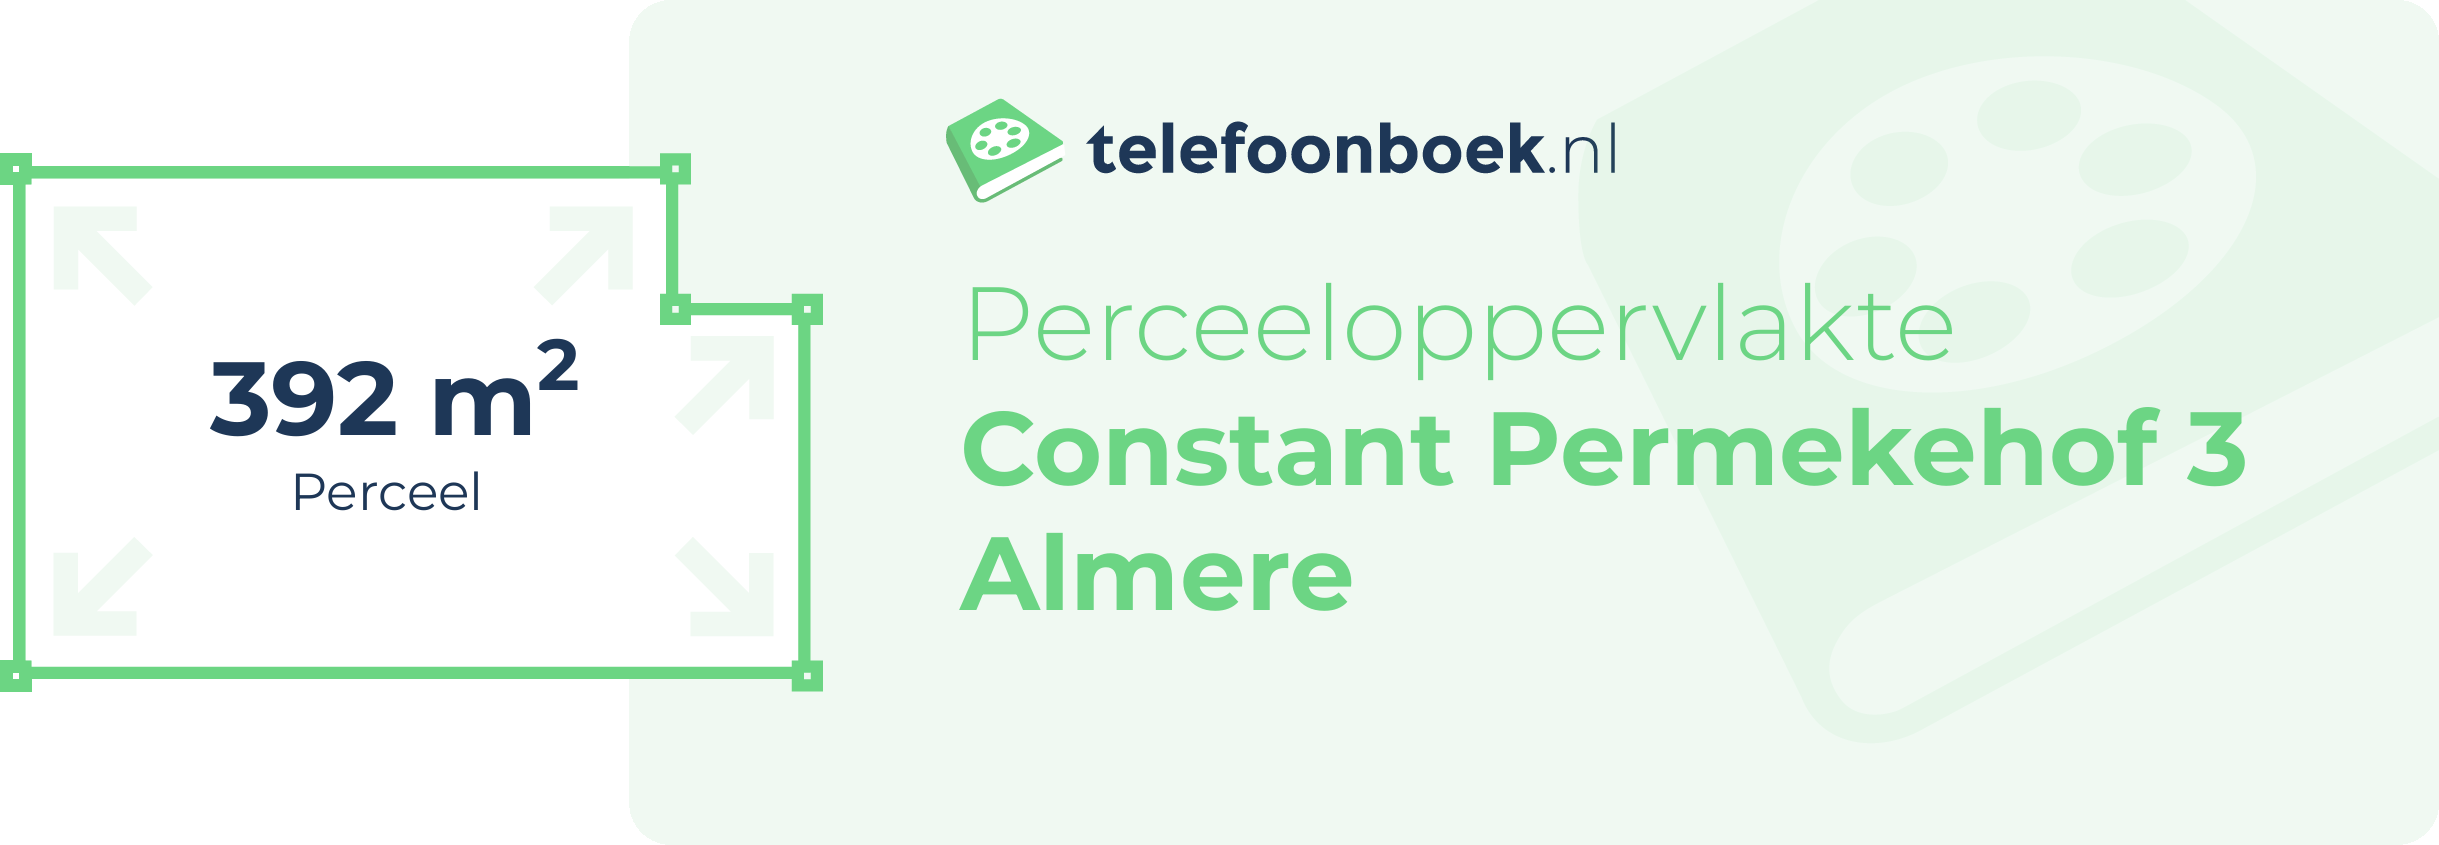 Perceeloppervlakte Constant Permekehof 3 Almere